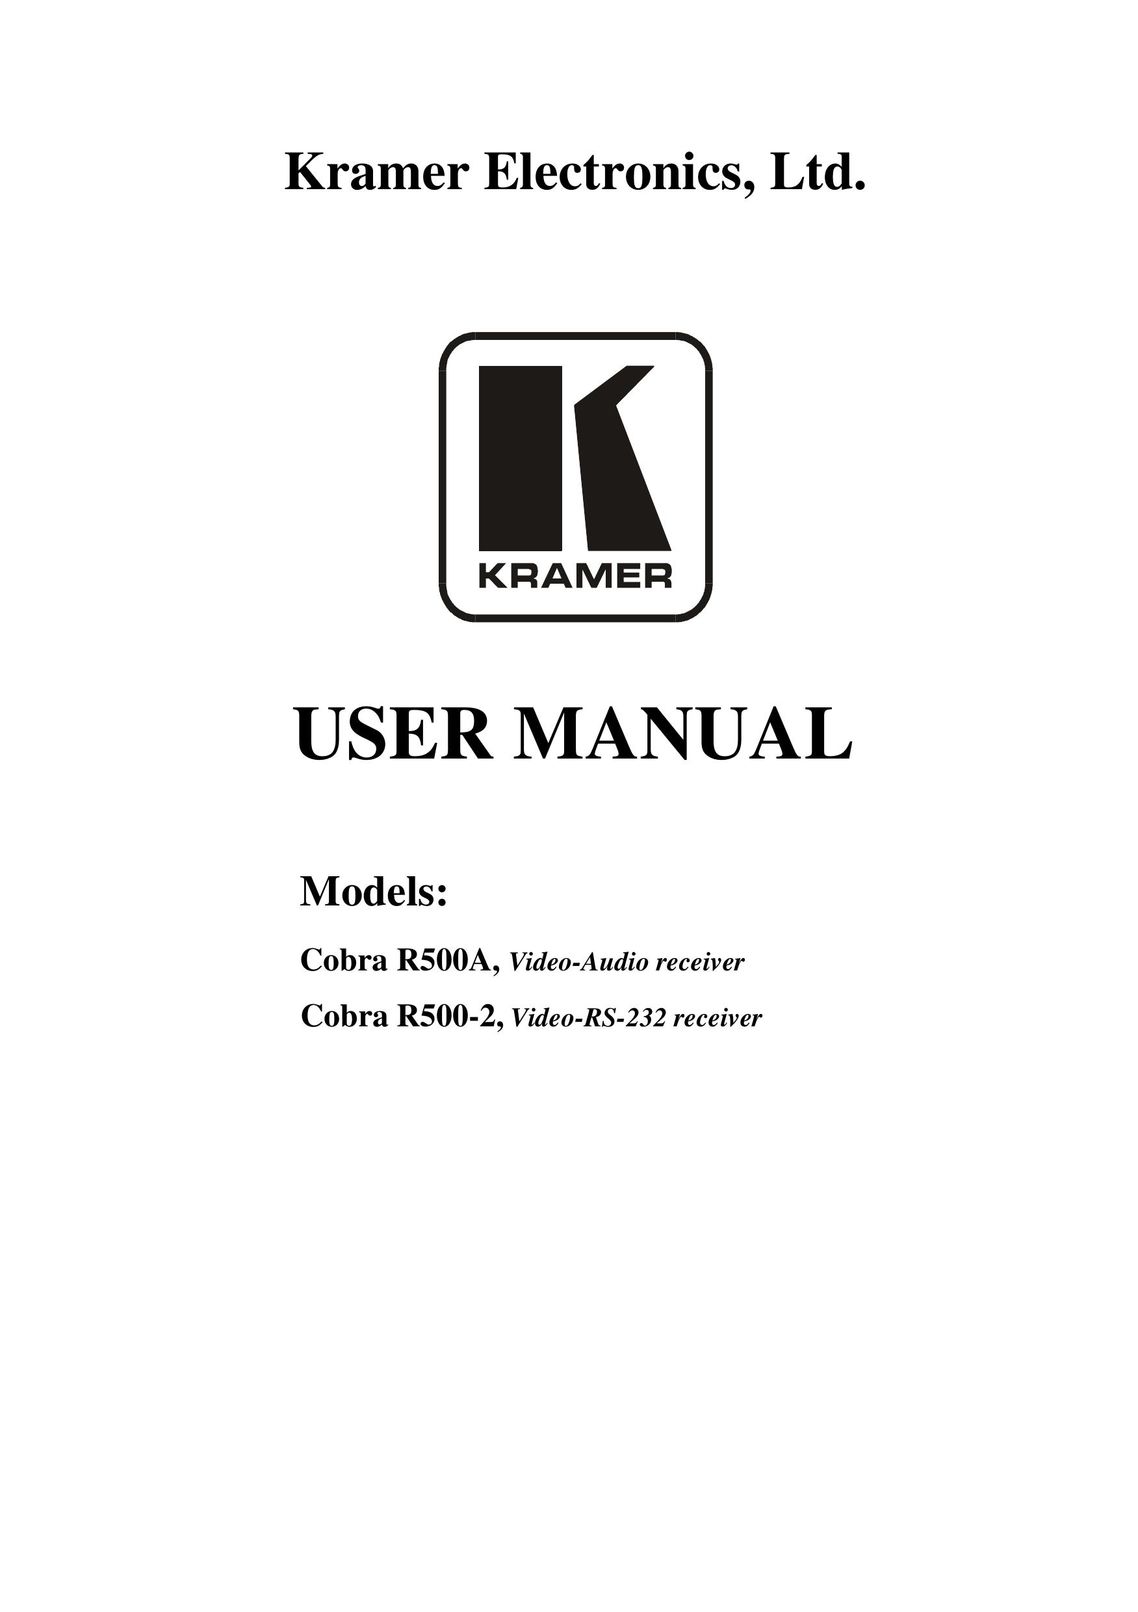 Kramer Electronics COBRA R500-2 Stereo Receiver User Manual